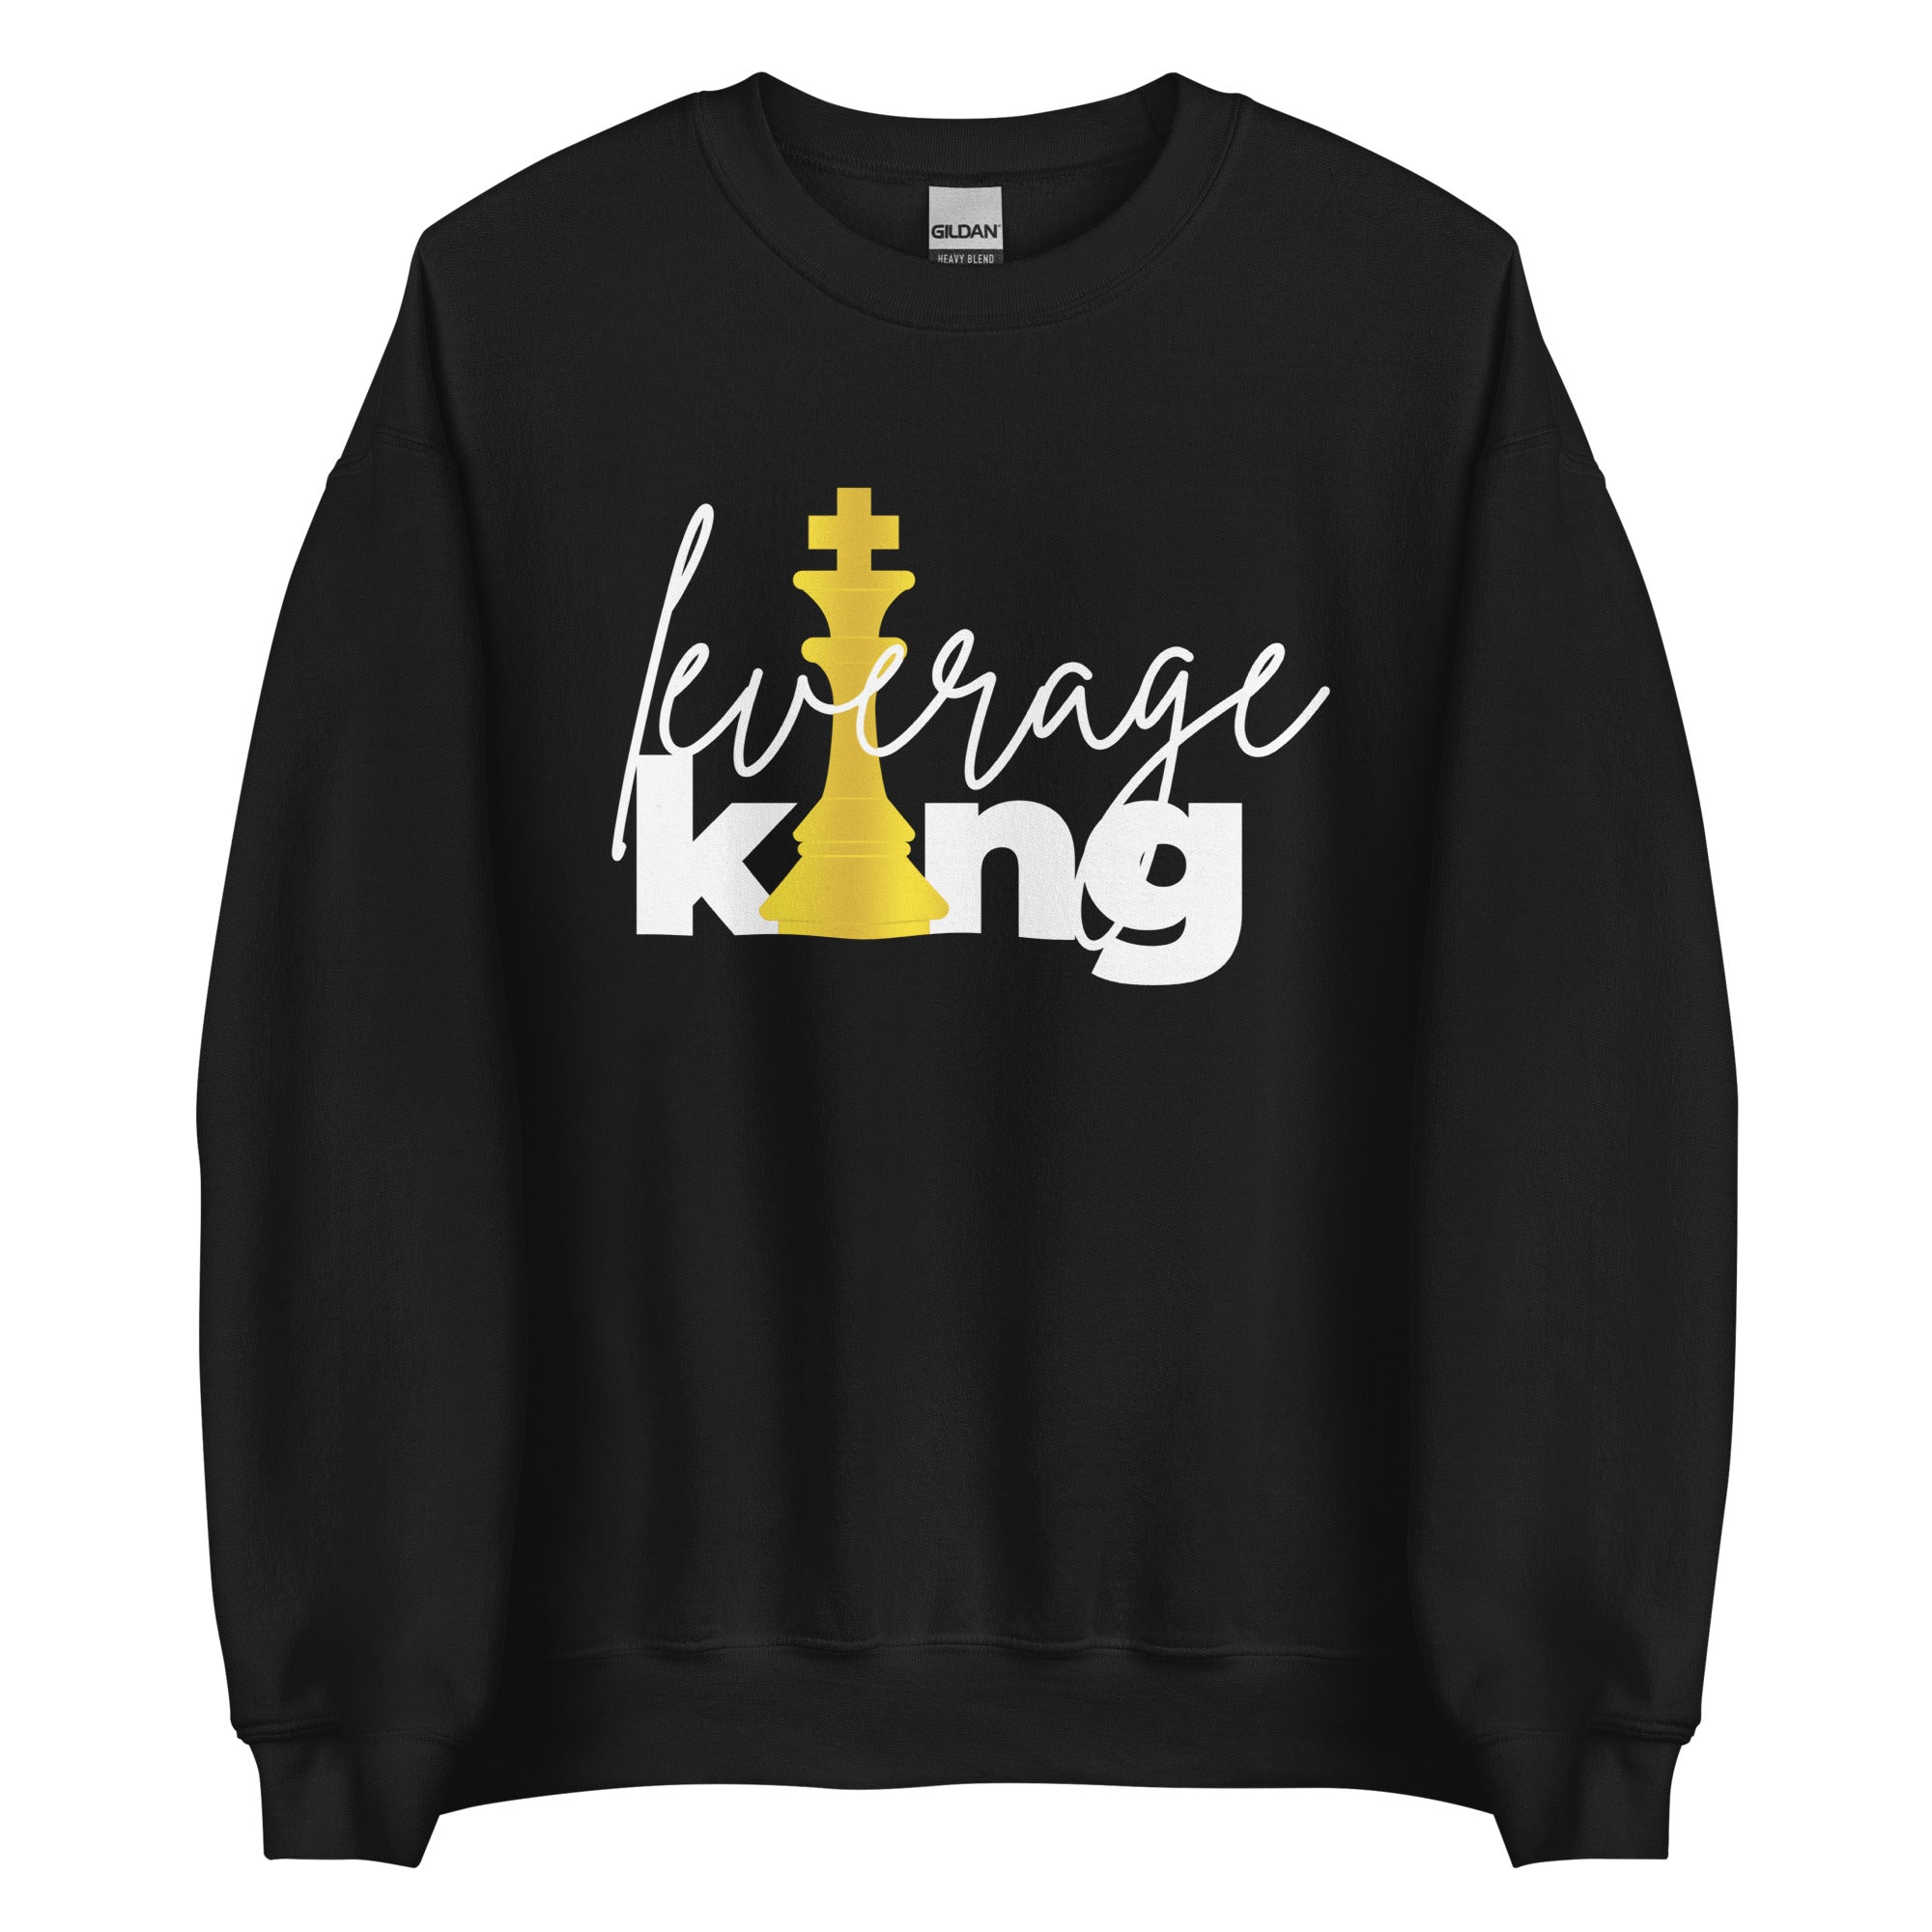 Leverage King Unisex Sweatshirt